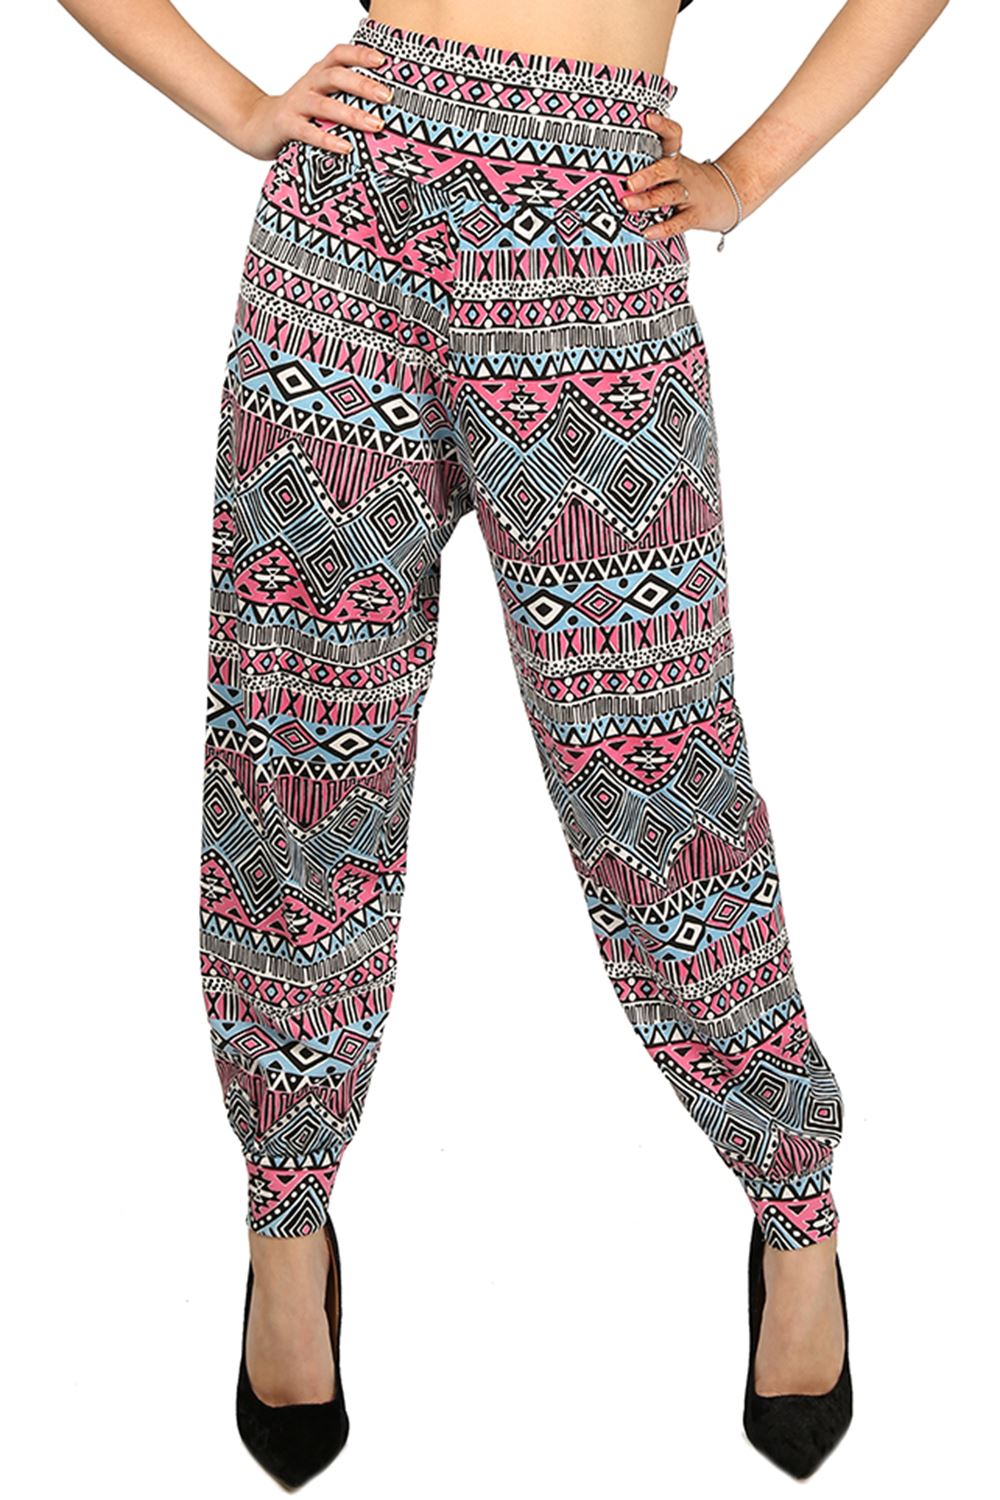 Harem pants for ladies womens-ladies-tropical-printed-ali-baba-bottoms-harem- ANYDEKI